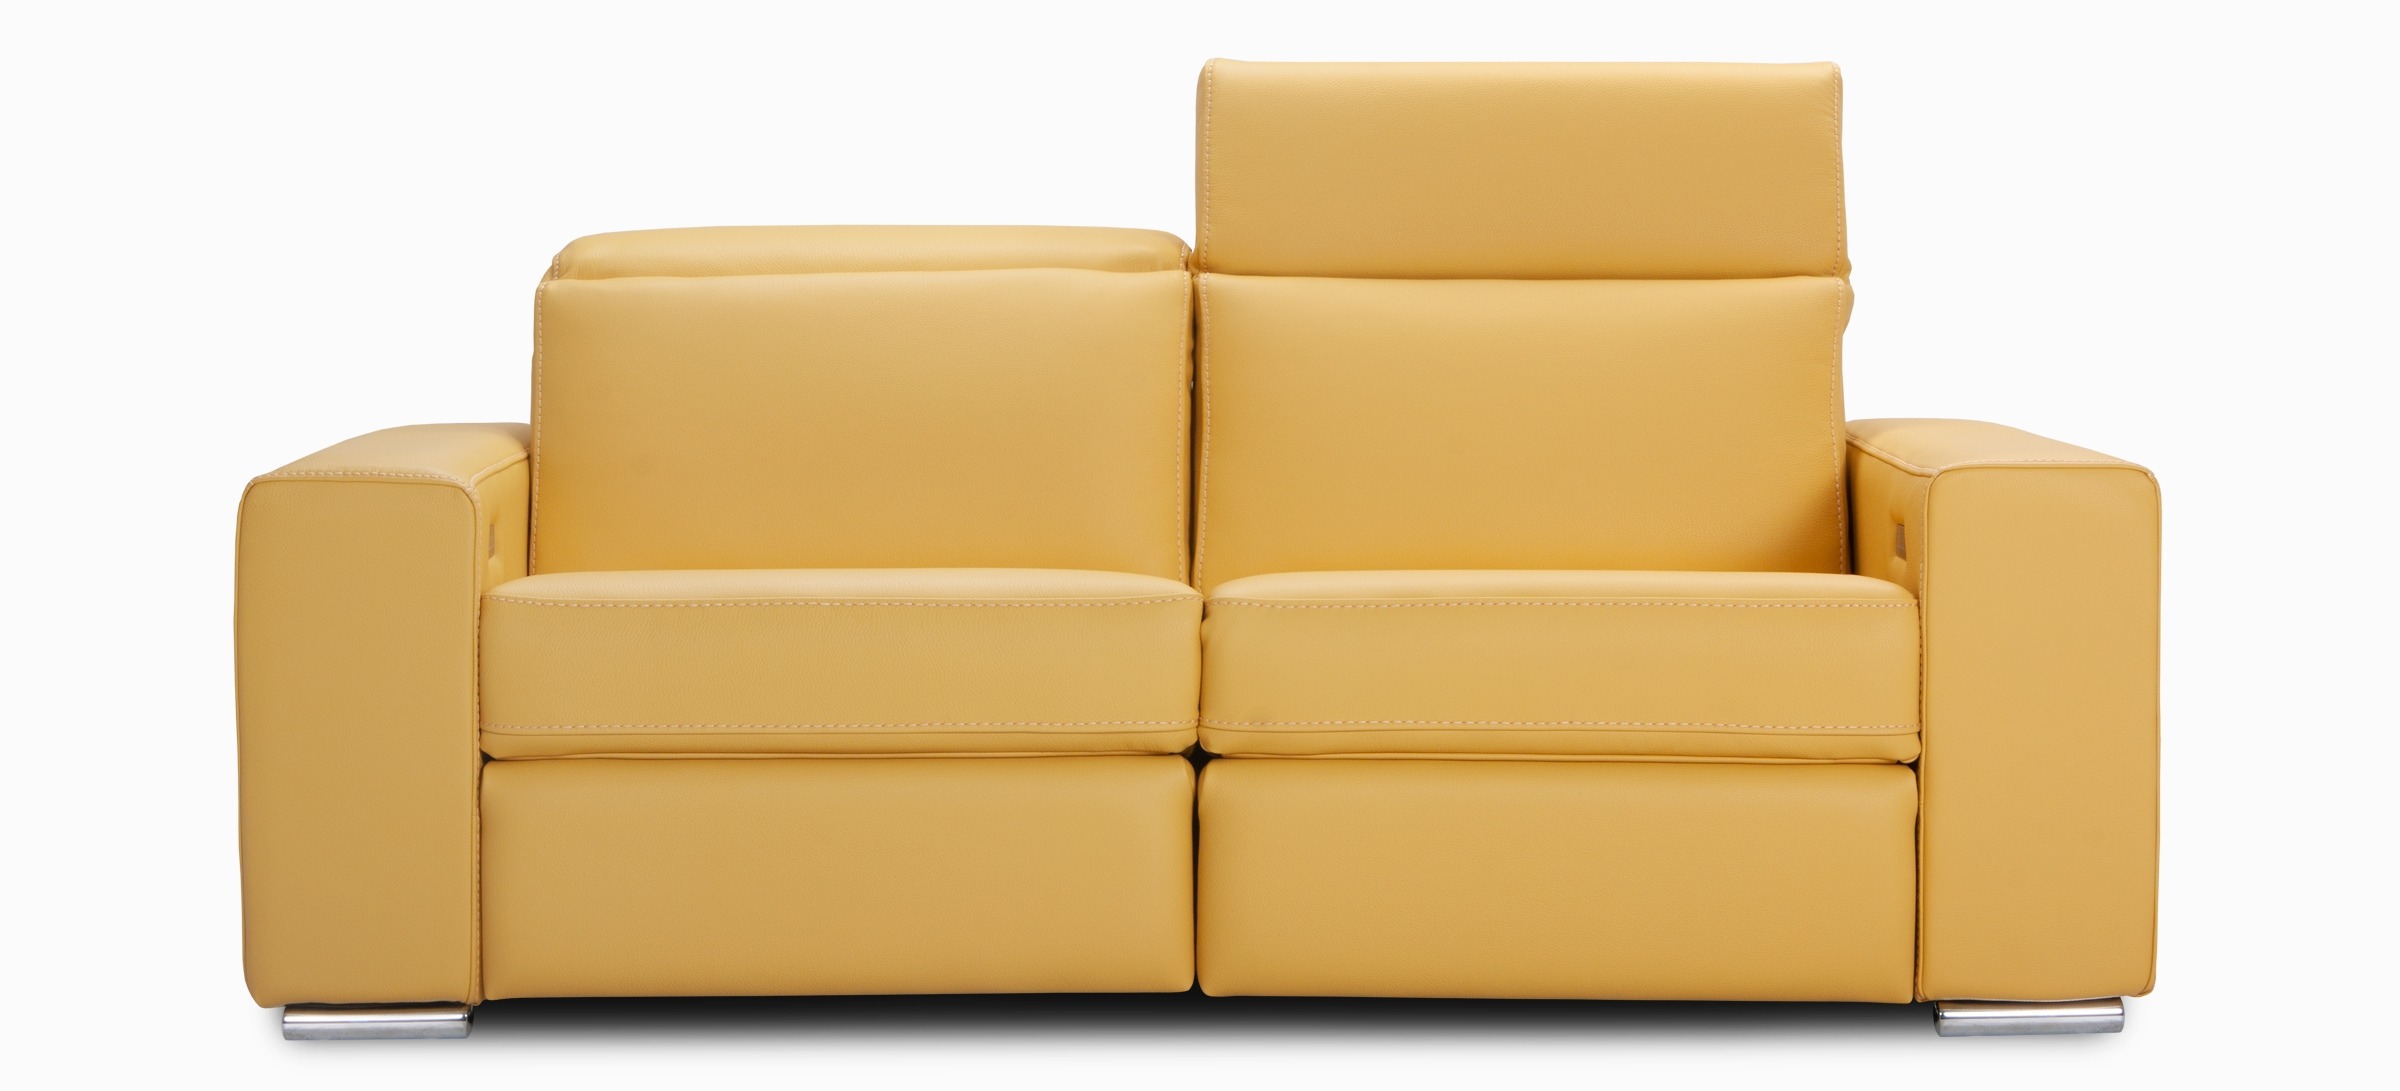 Seattle sofa apt illusion lemon front1